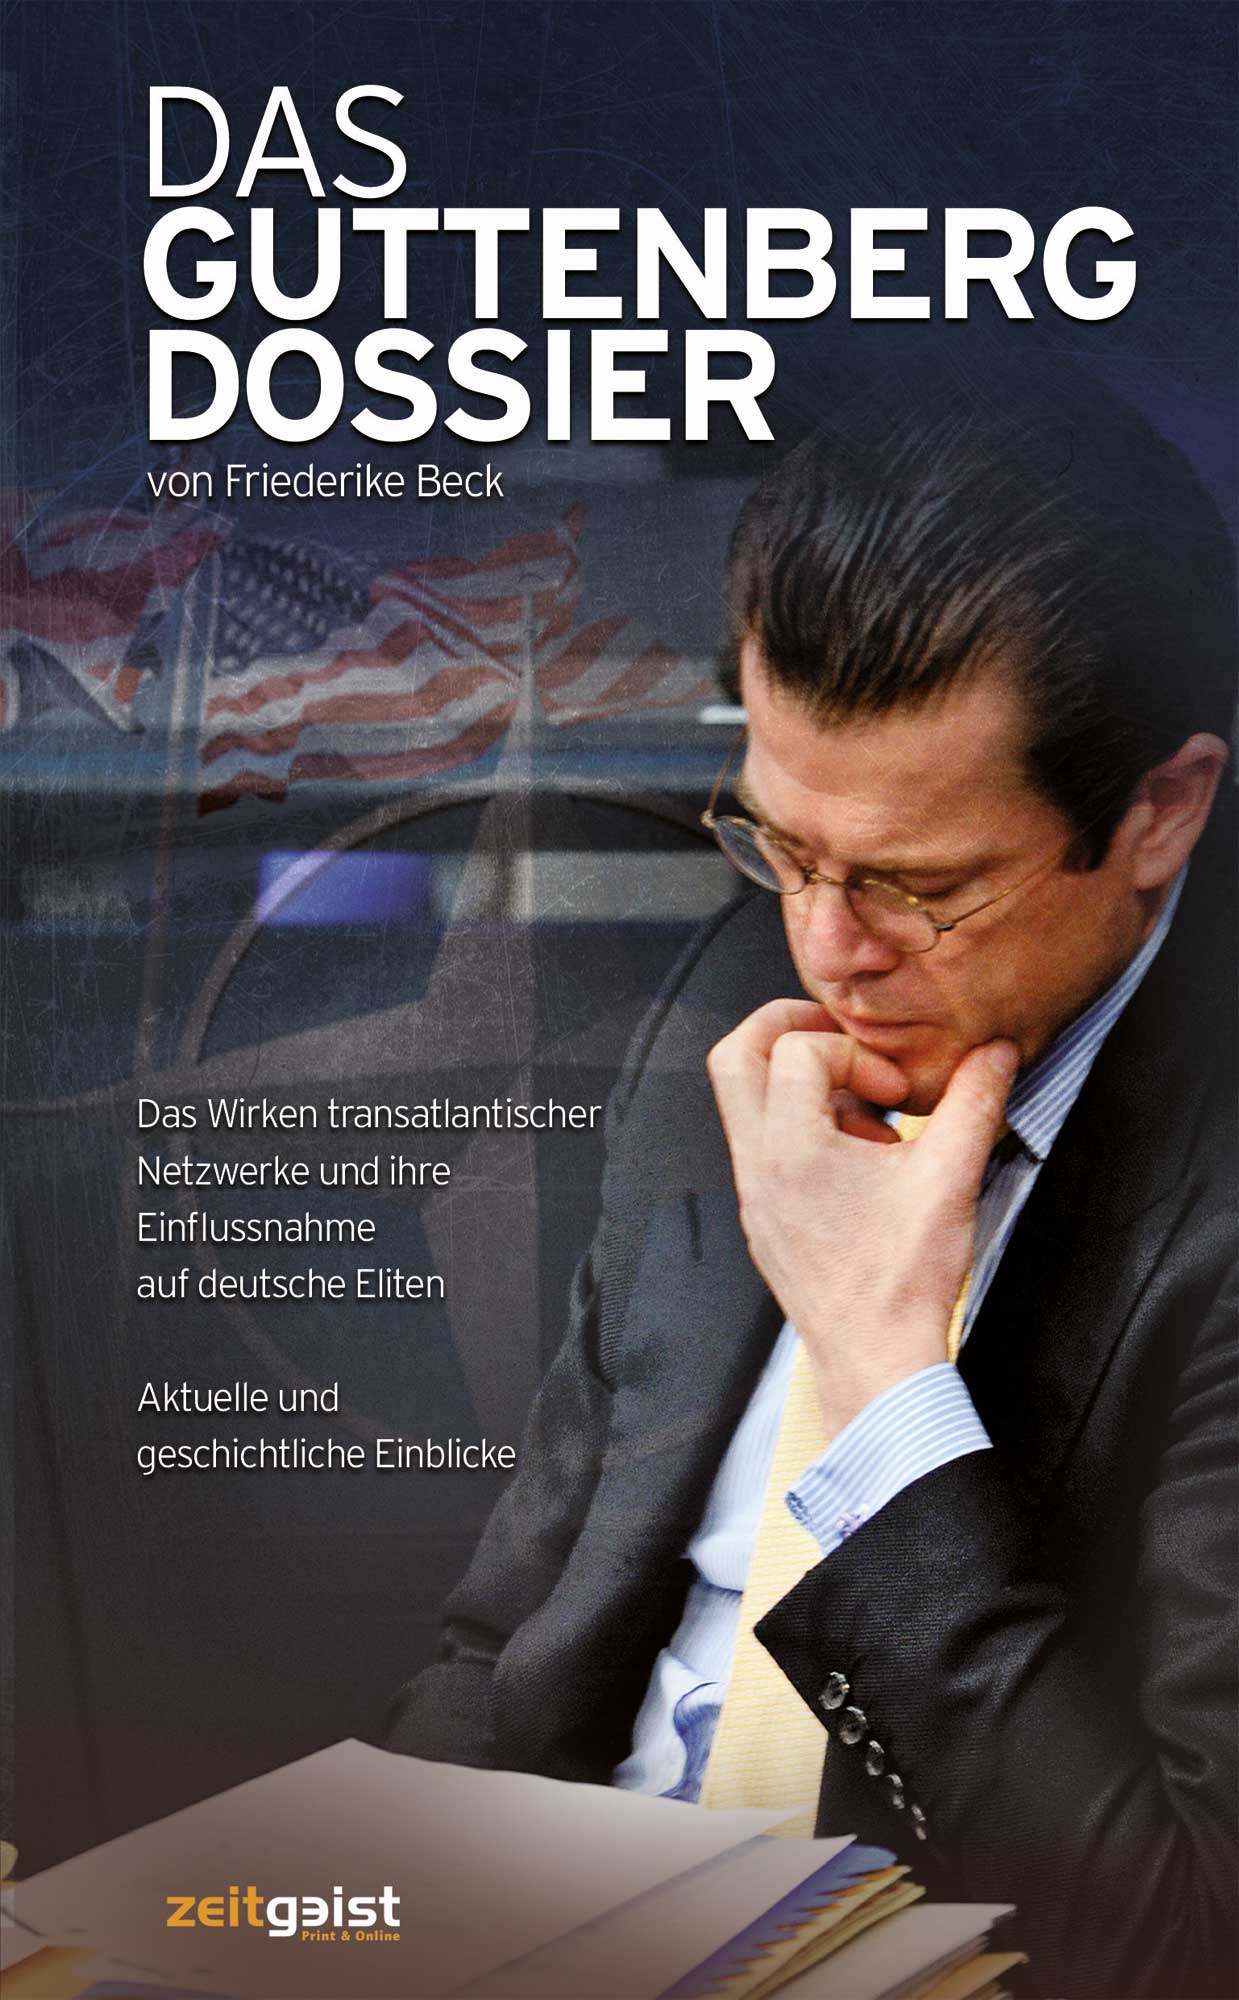  - Guttenberg-Dossier-Cover2